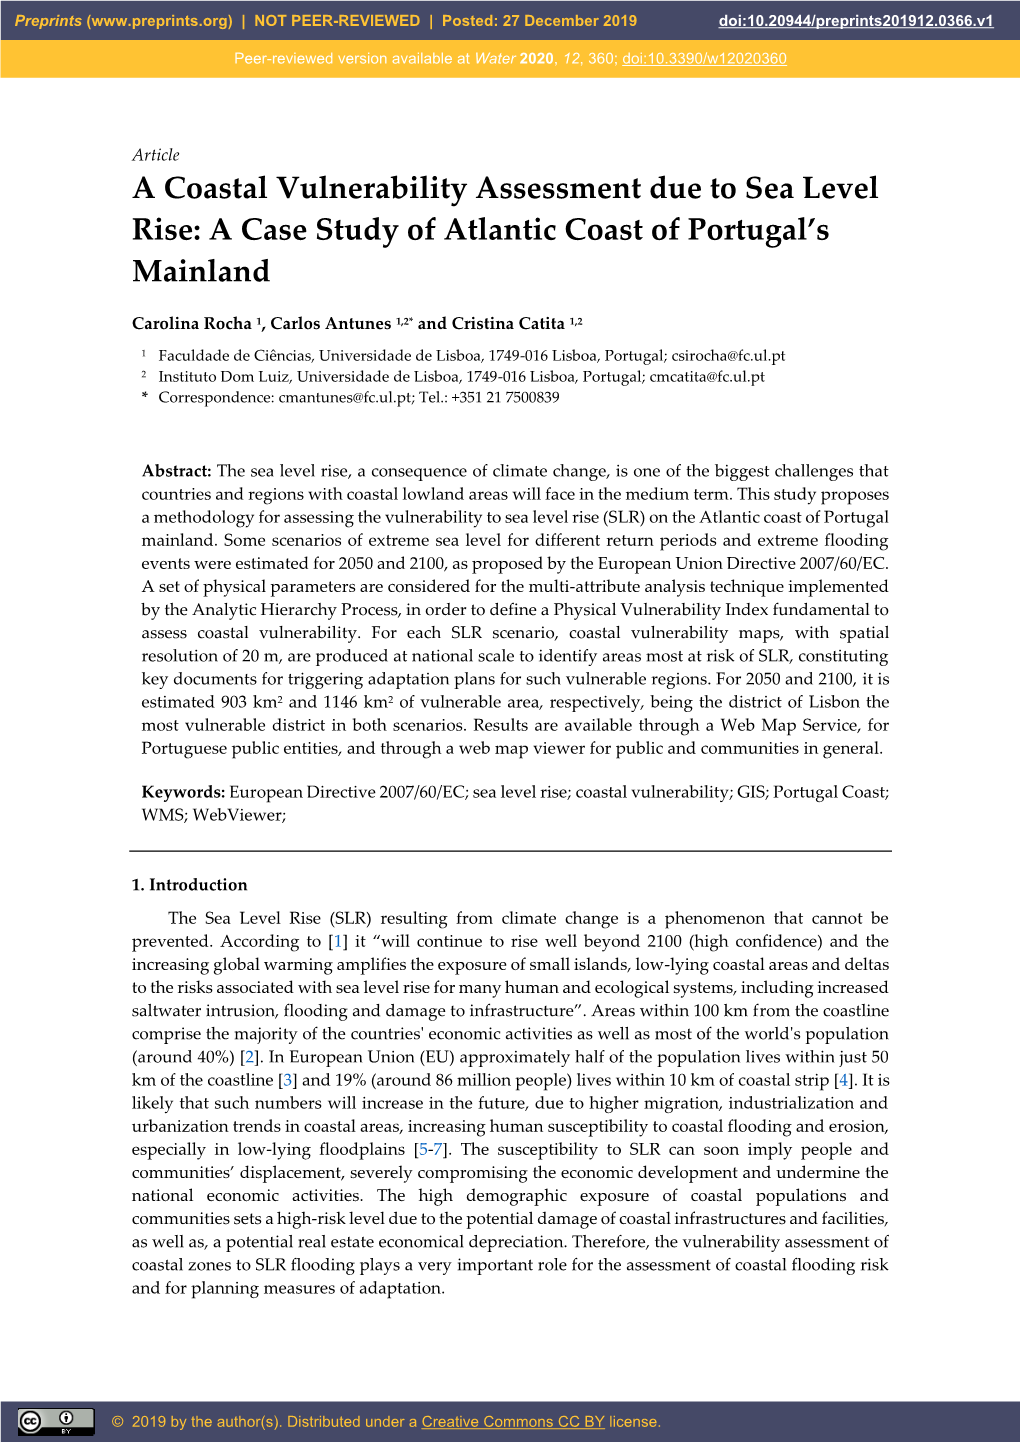 A Coastal Vulnerability Assessment Due to Sea Level Rise: a Case Study of Atlantic Coast of Portugal’S Mainland